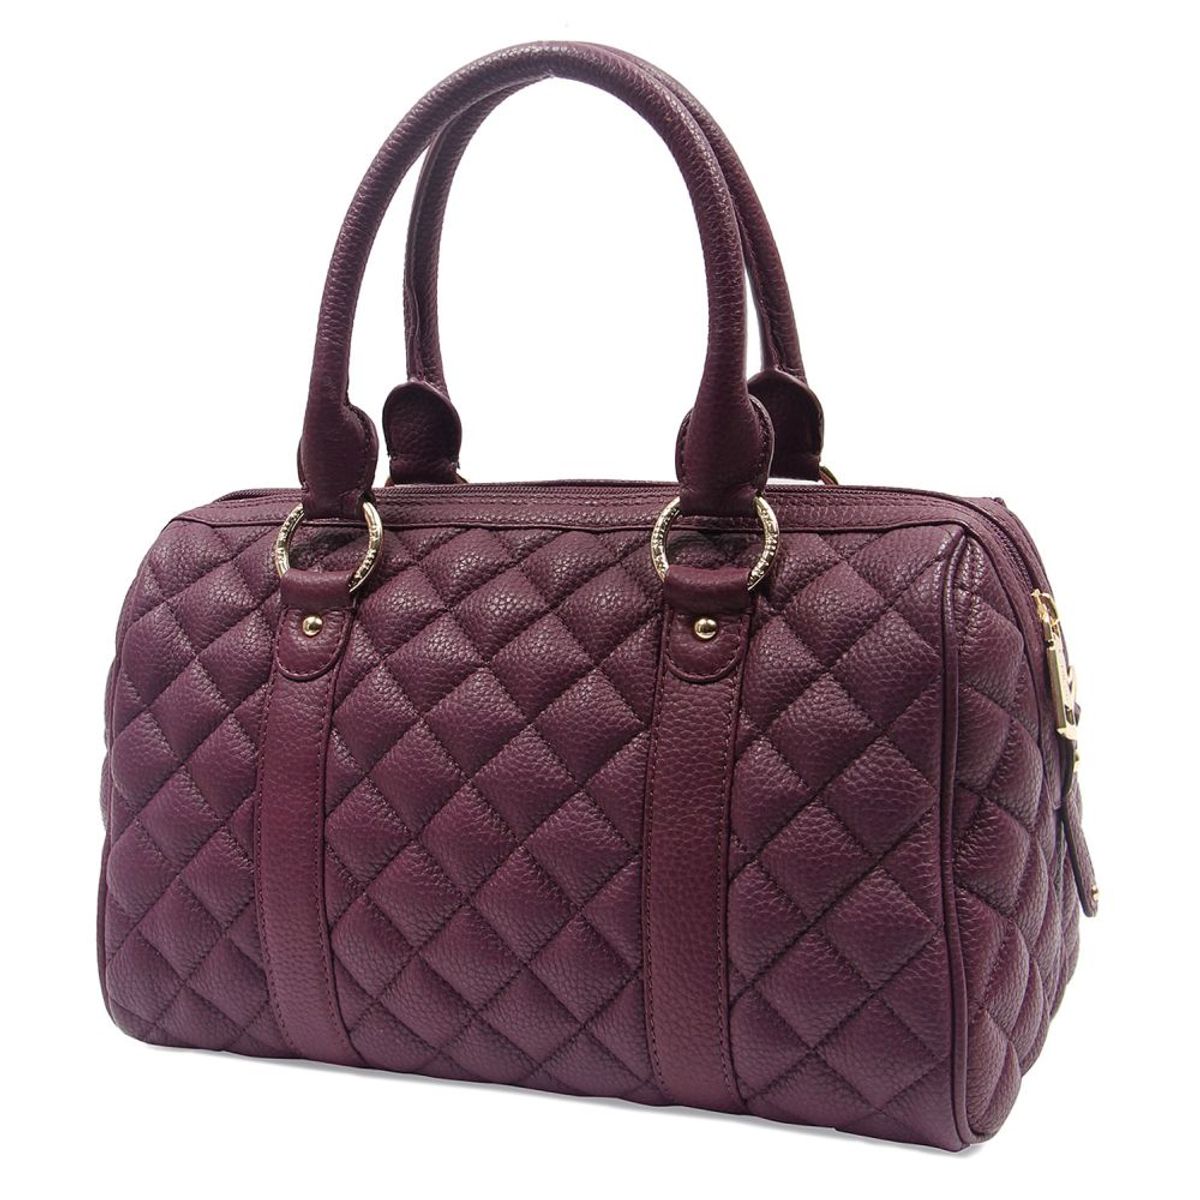 Da Milano Purple Duffle Bag | Lb-7048purplequilting